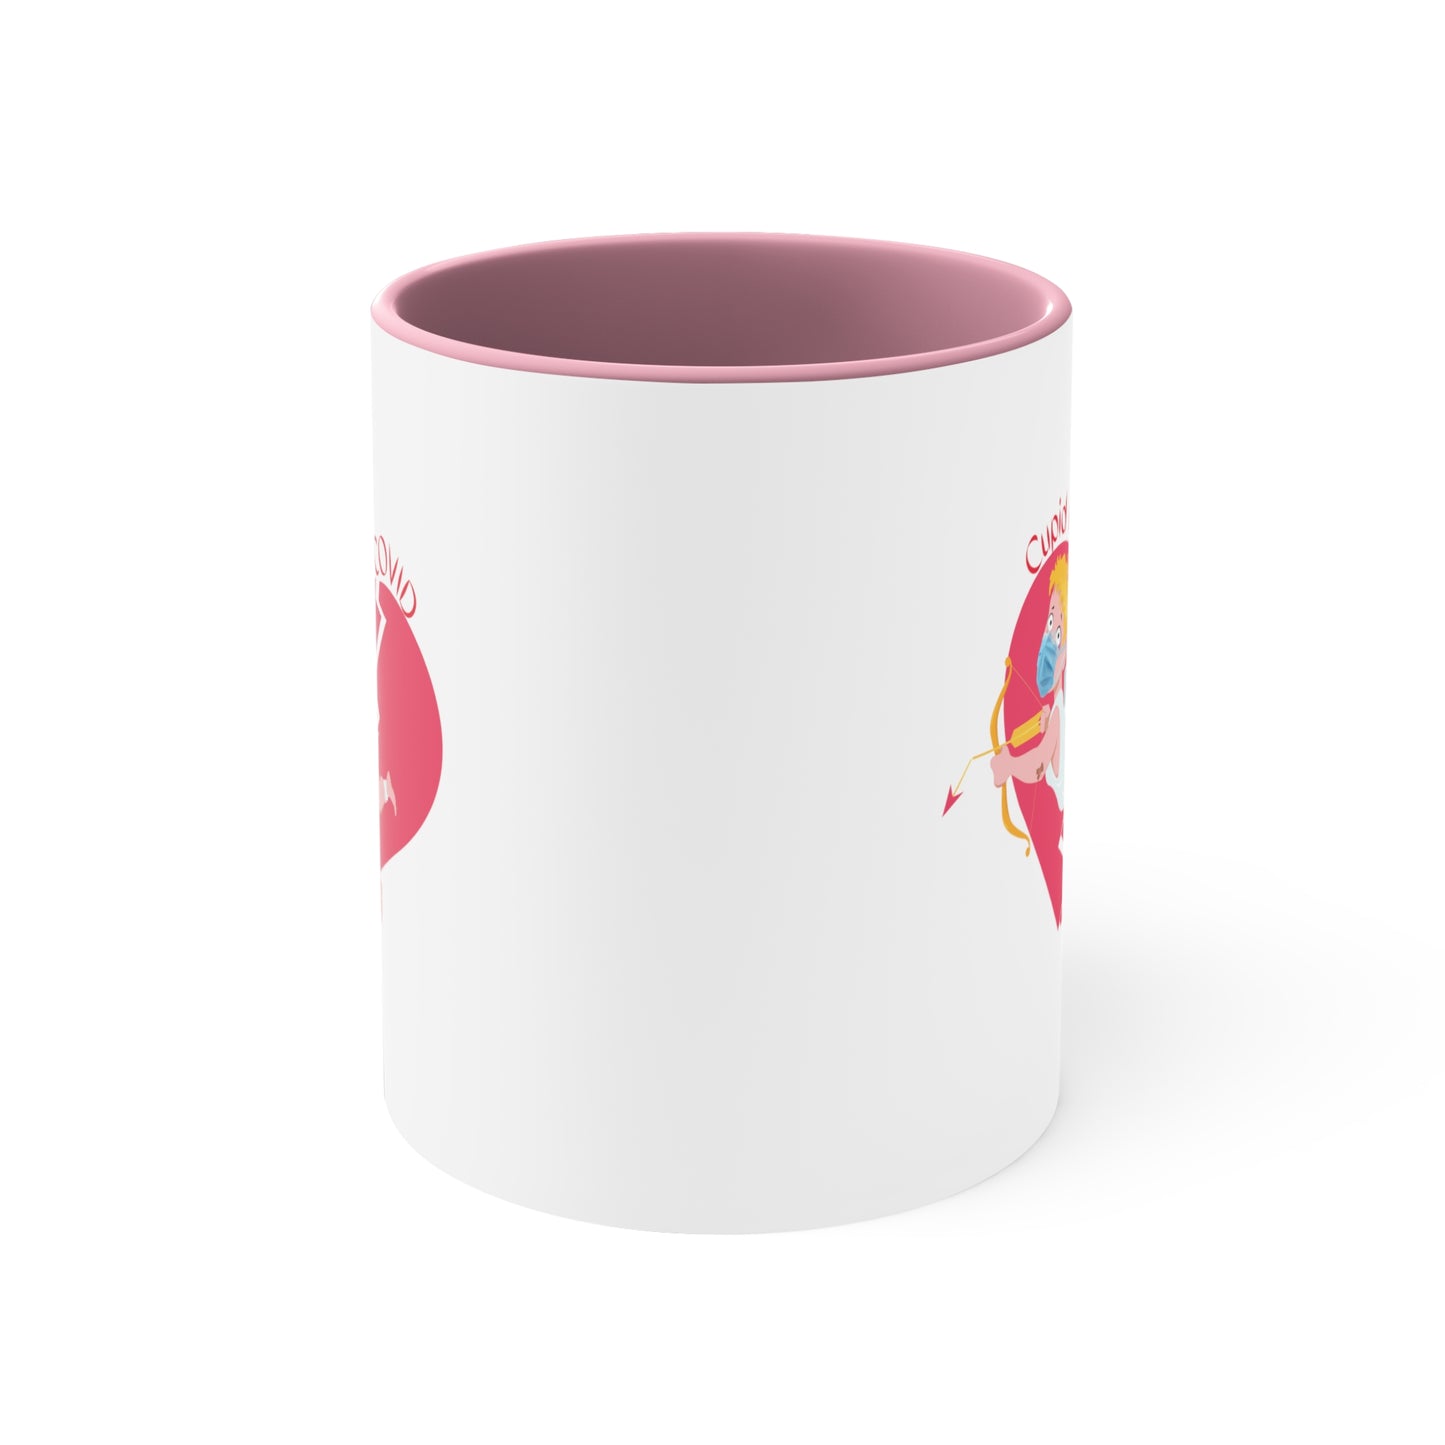 Cupid has COVID Accent Coffee Mug (11oz)